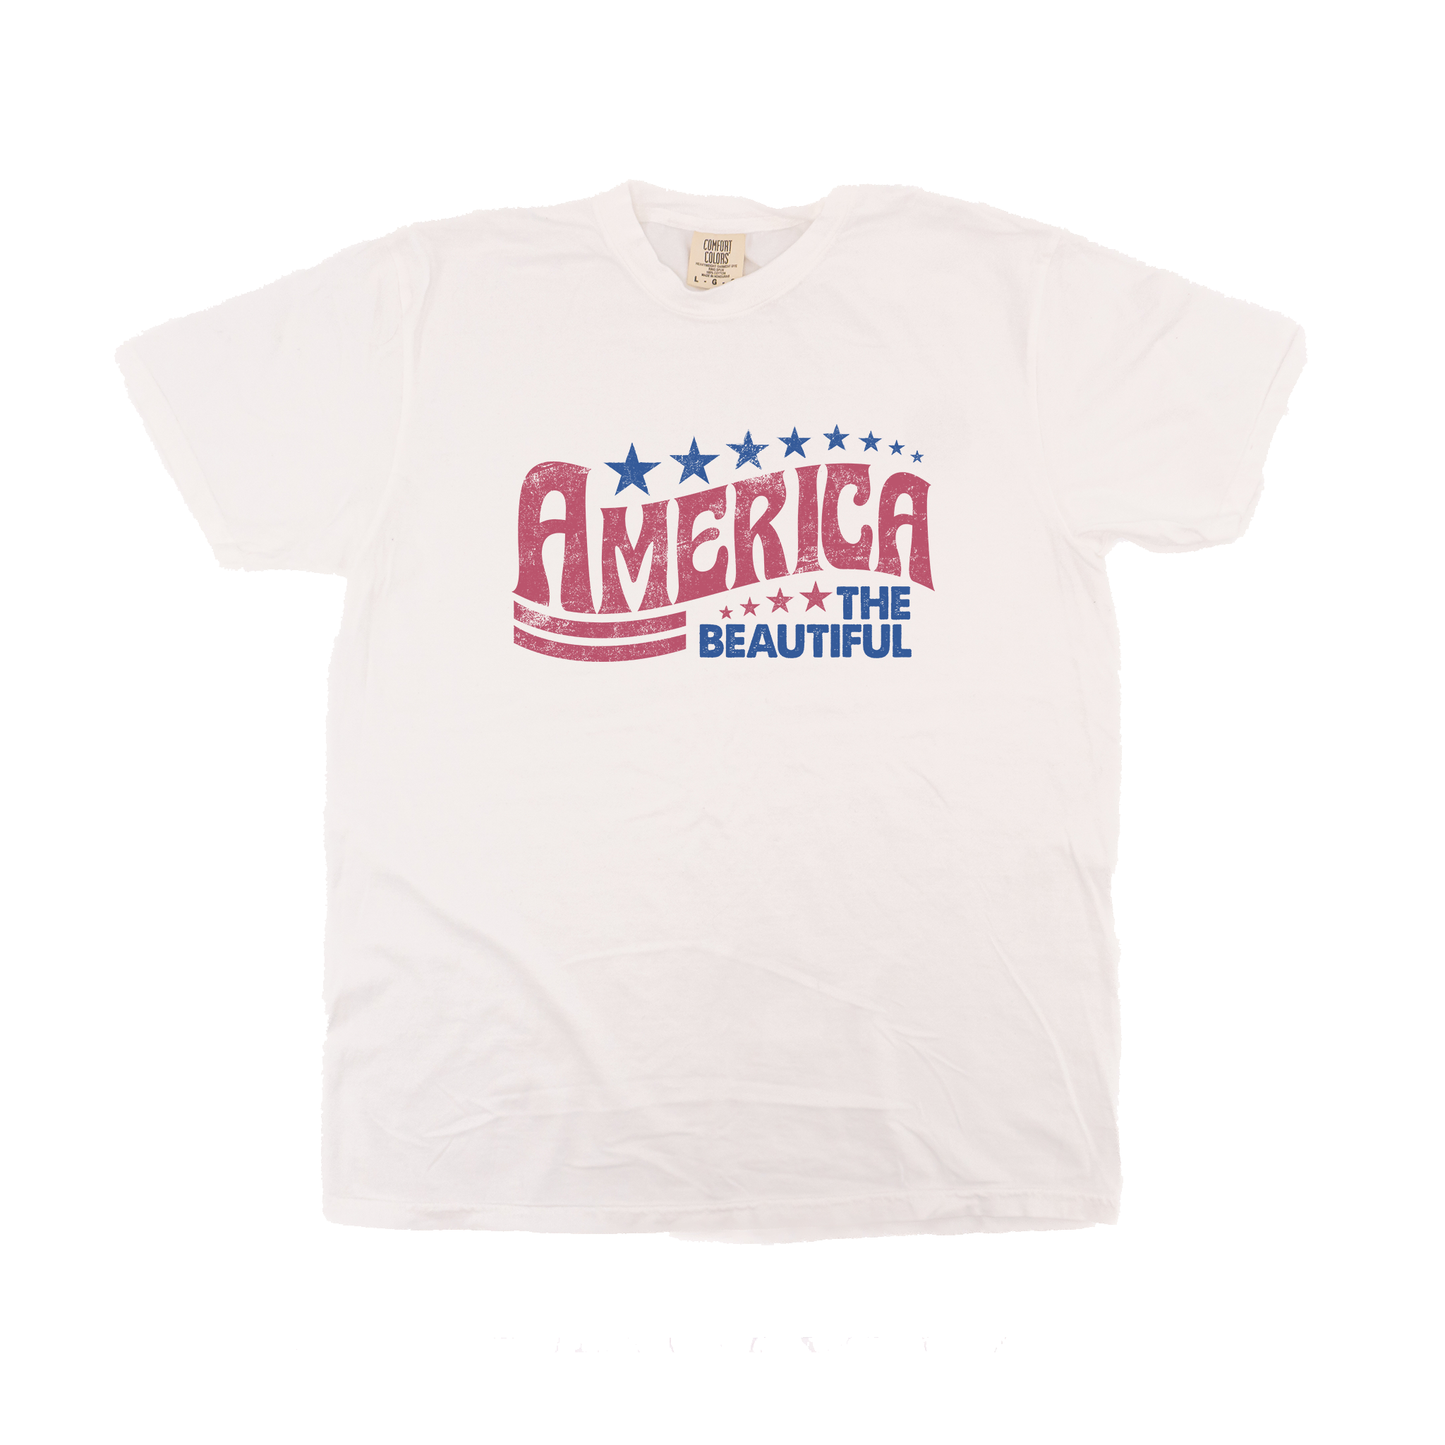 America The Beautiful - Tee (Vintage White, Short Sleeve)